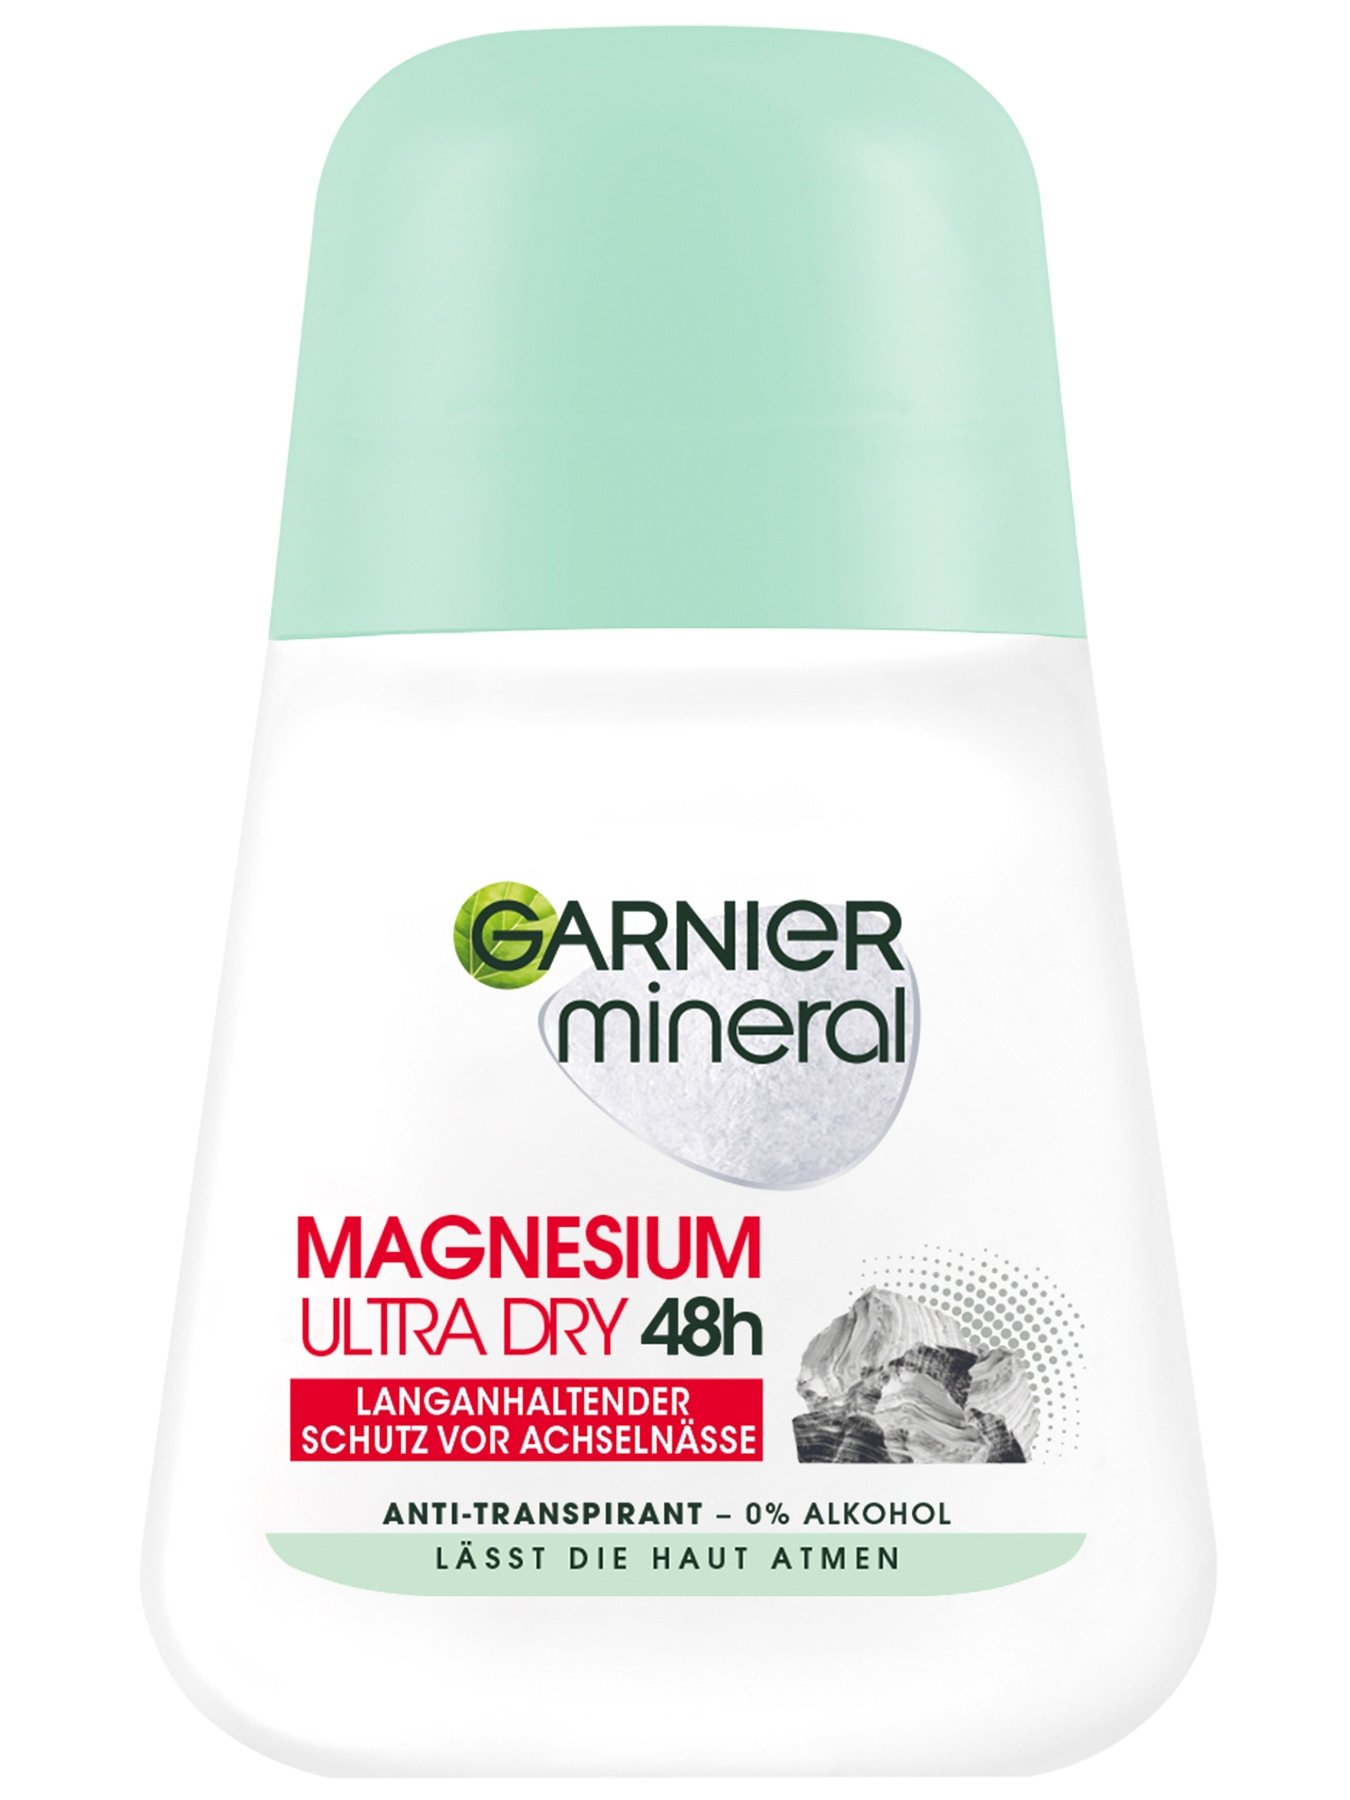 Garnier Mineral Magnesium Deodorant vorne